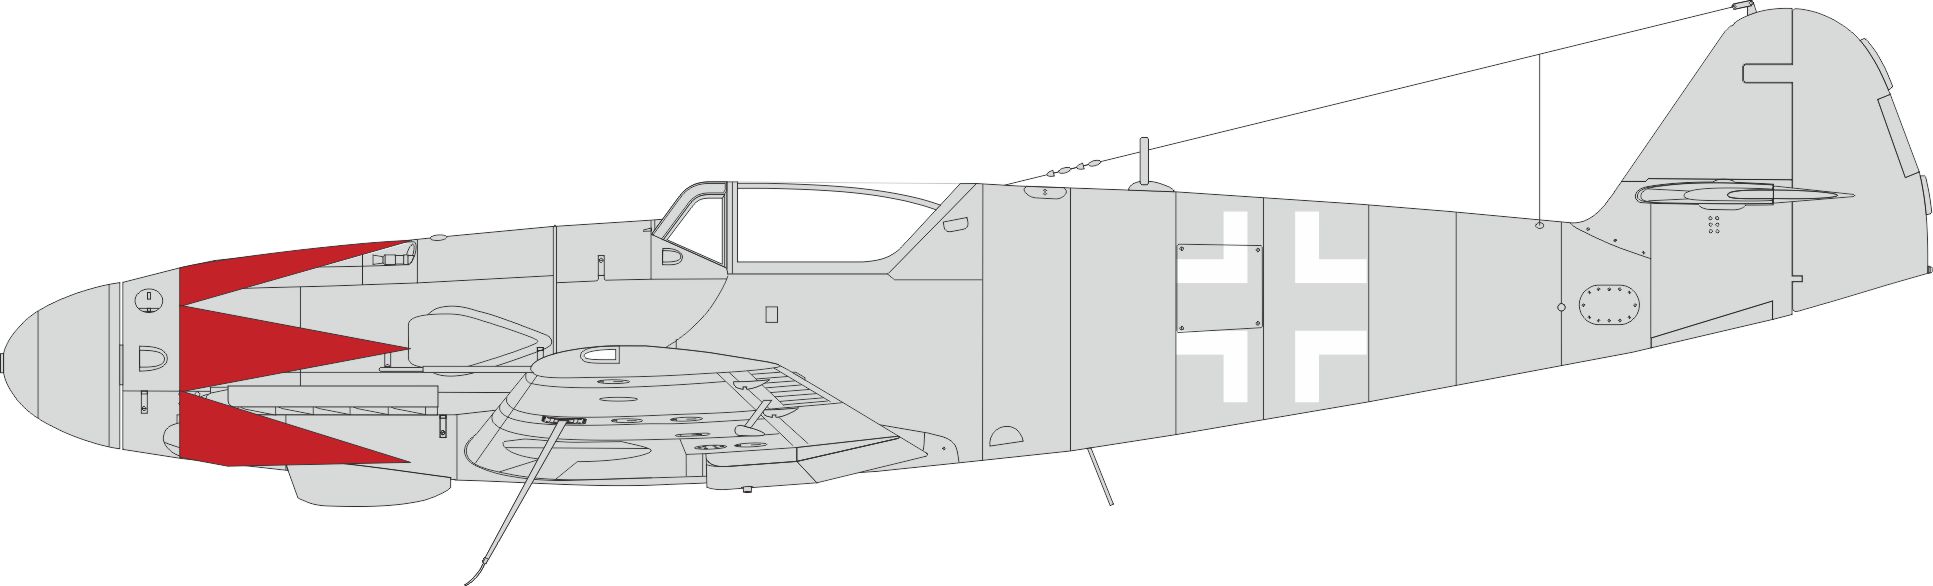 1/48 Bf 109K-4 tulip pattern & national insignia